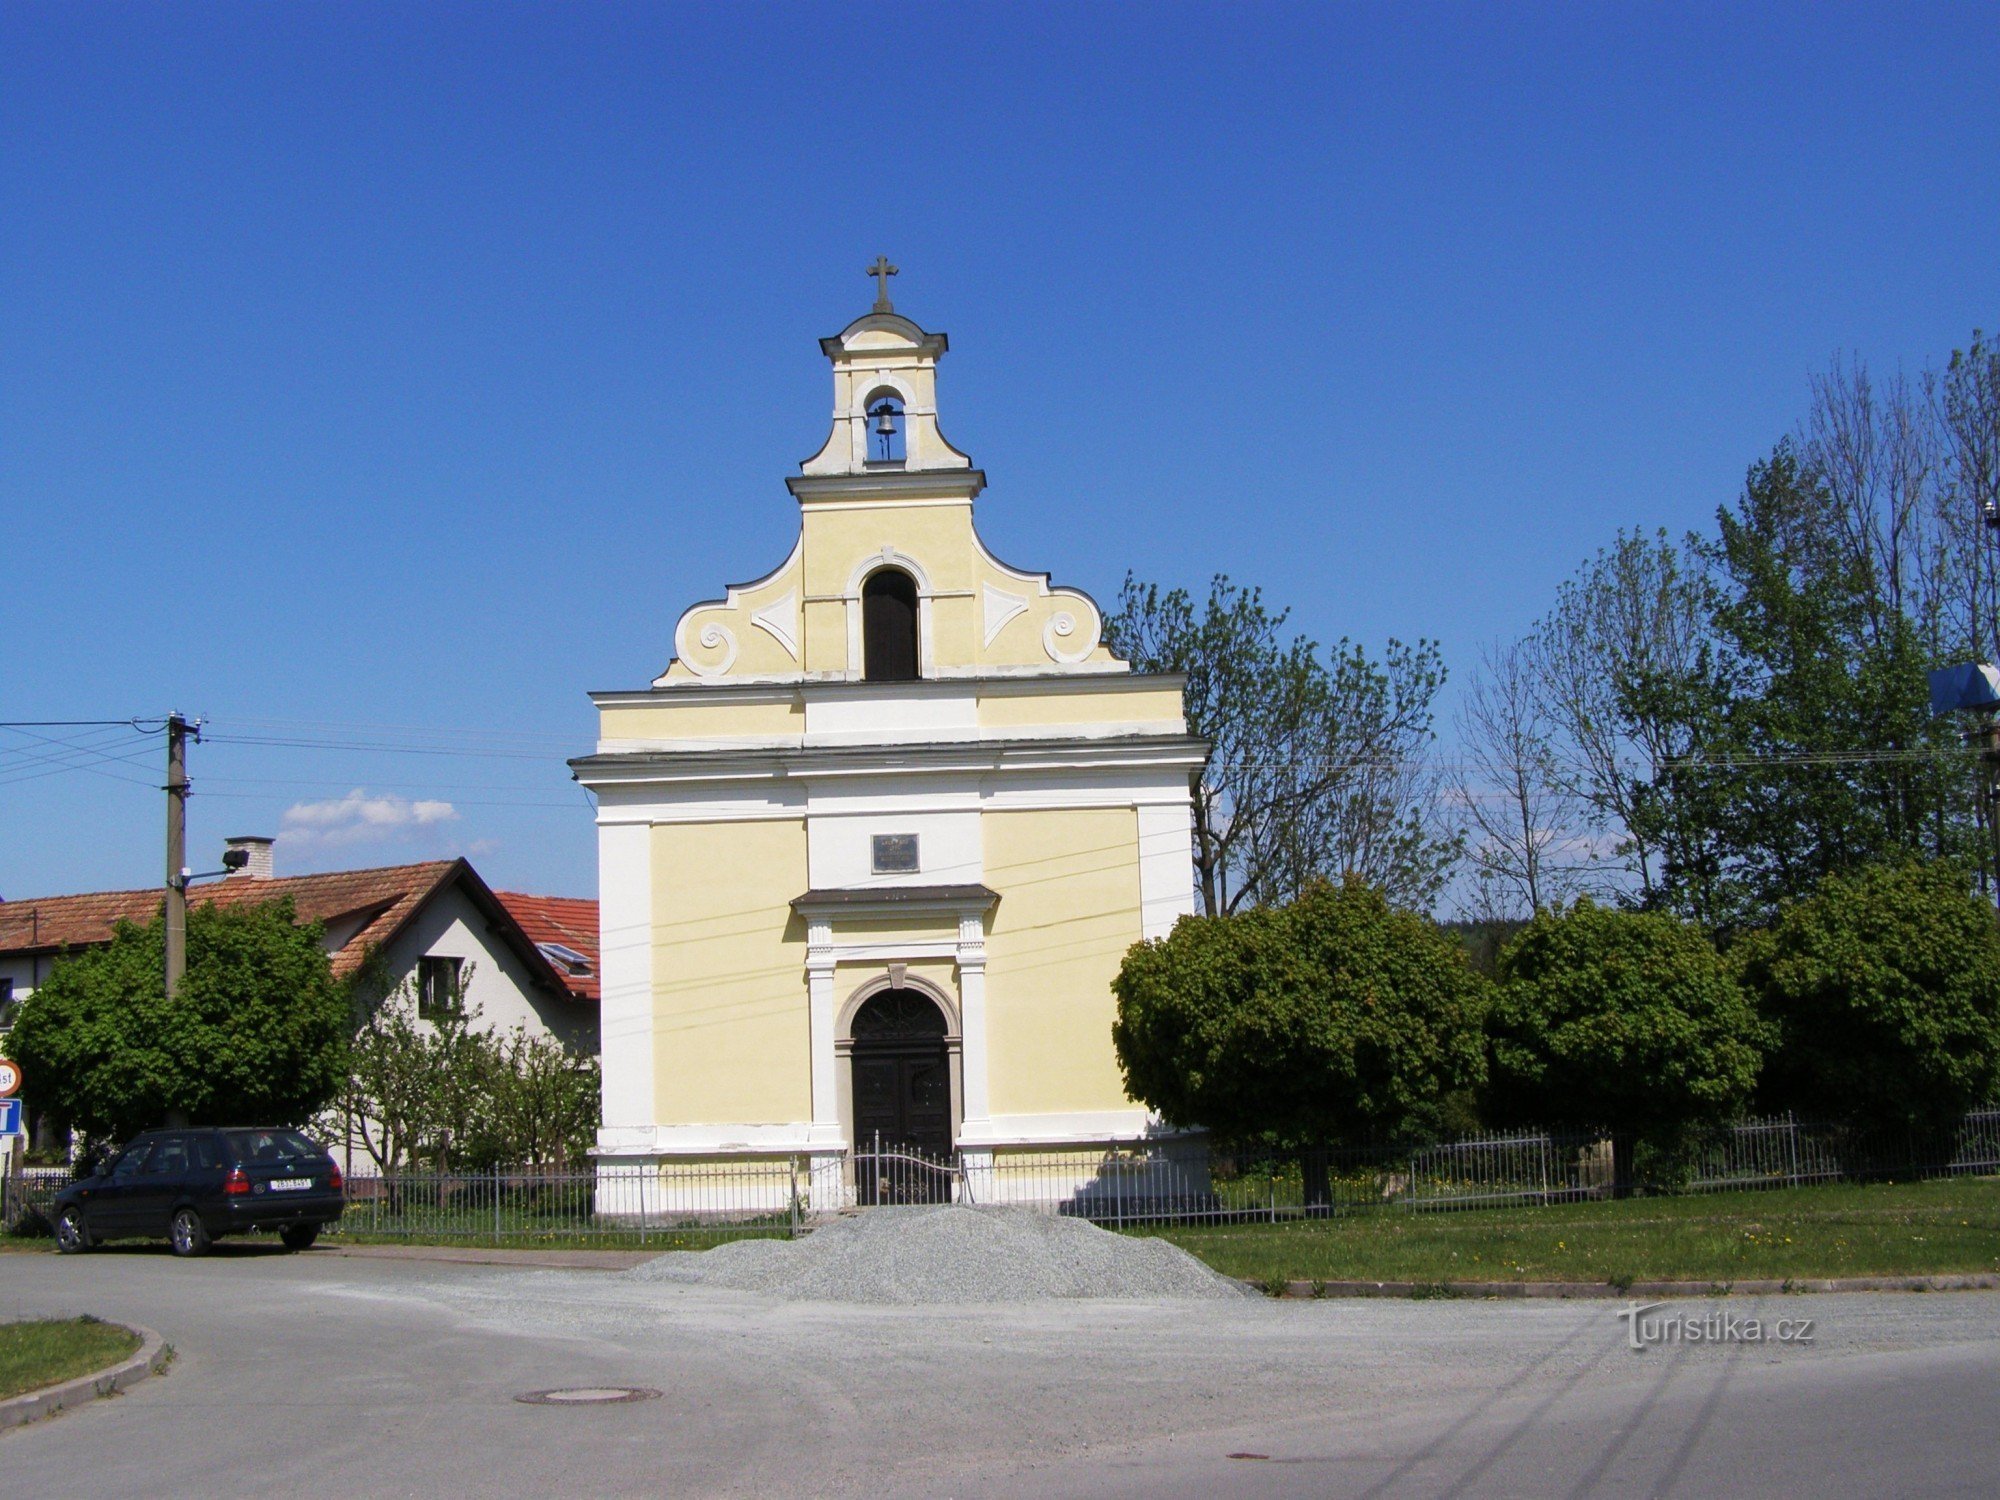 Semechnice - Chapel of the Assumption of the Virgin Mary